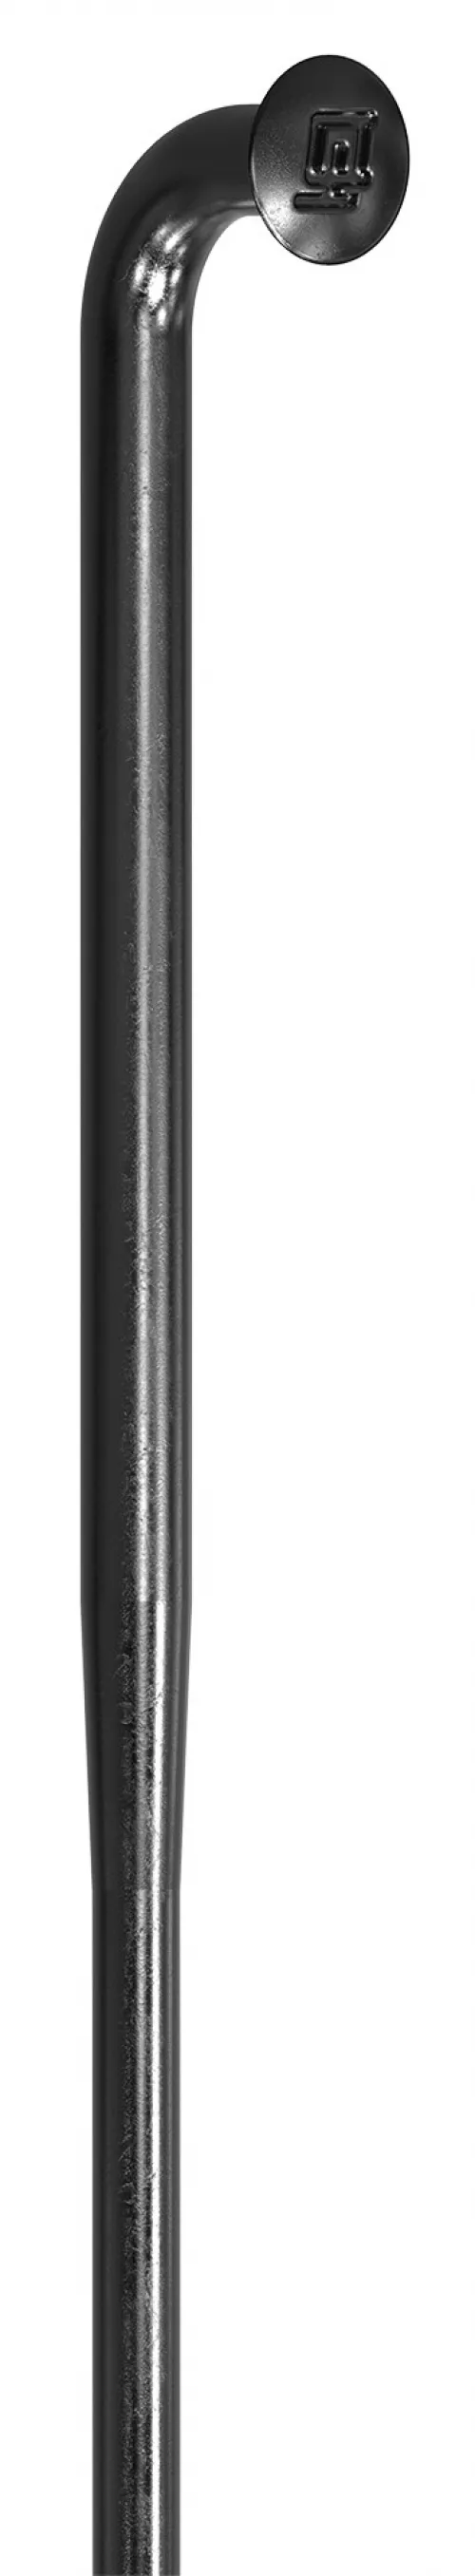 Спицы DT Swiss Alpine III Standard (J-bend) 2.0/1.8/2.34mm x 274mm black 100шт